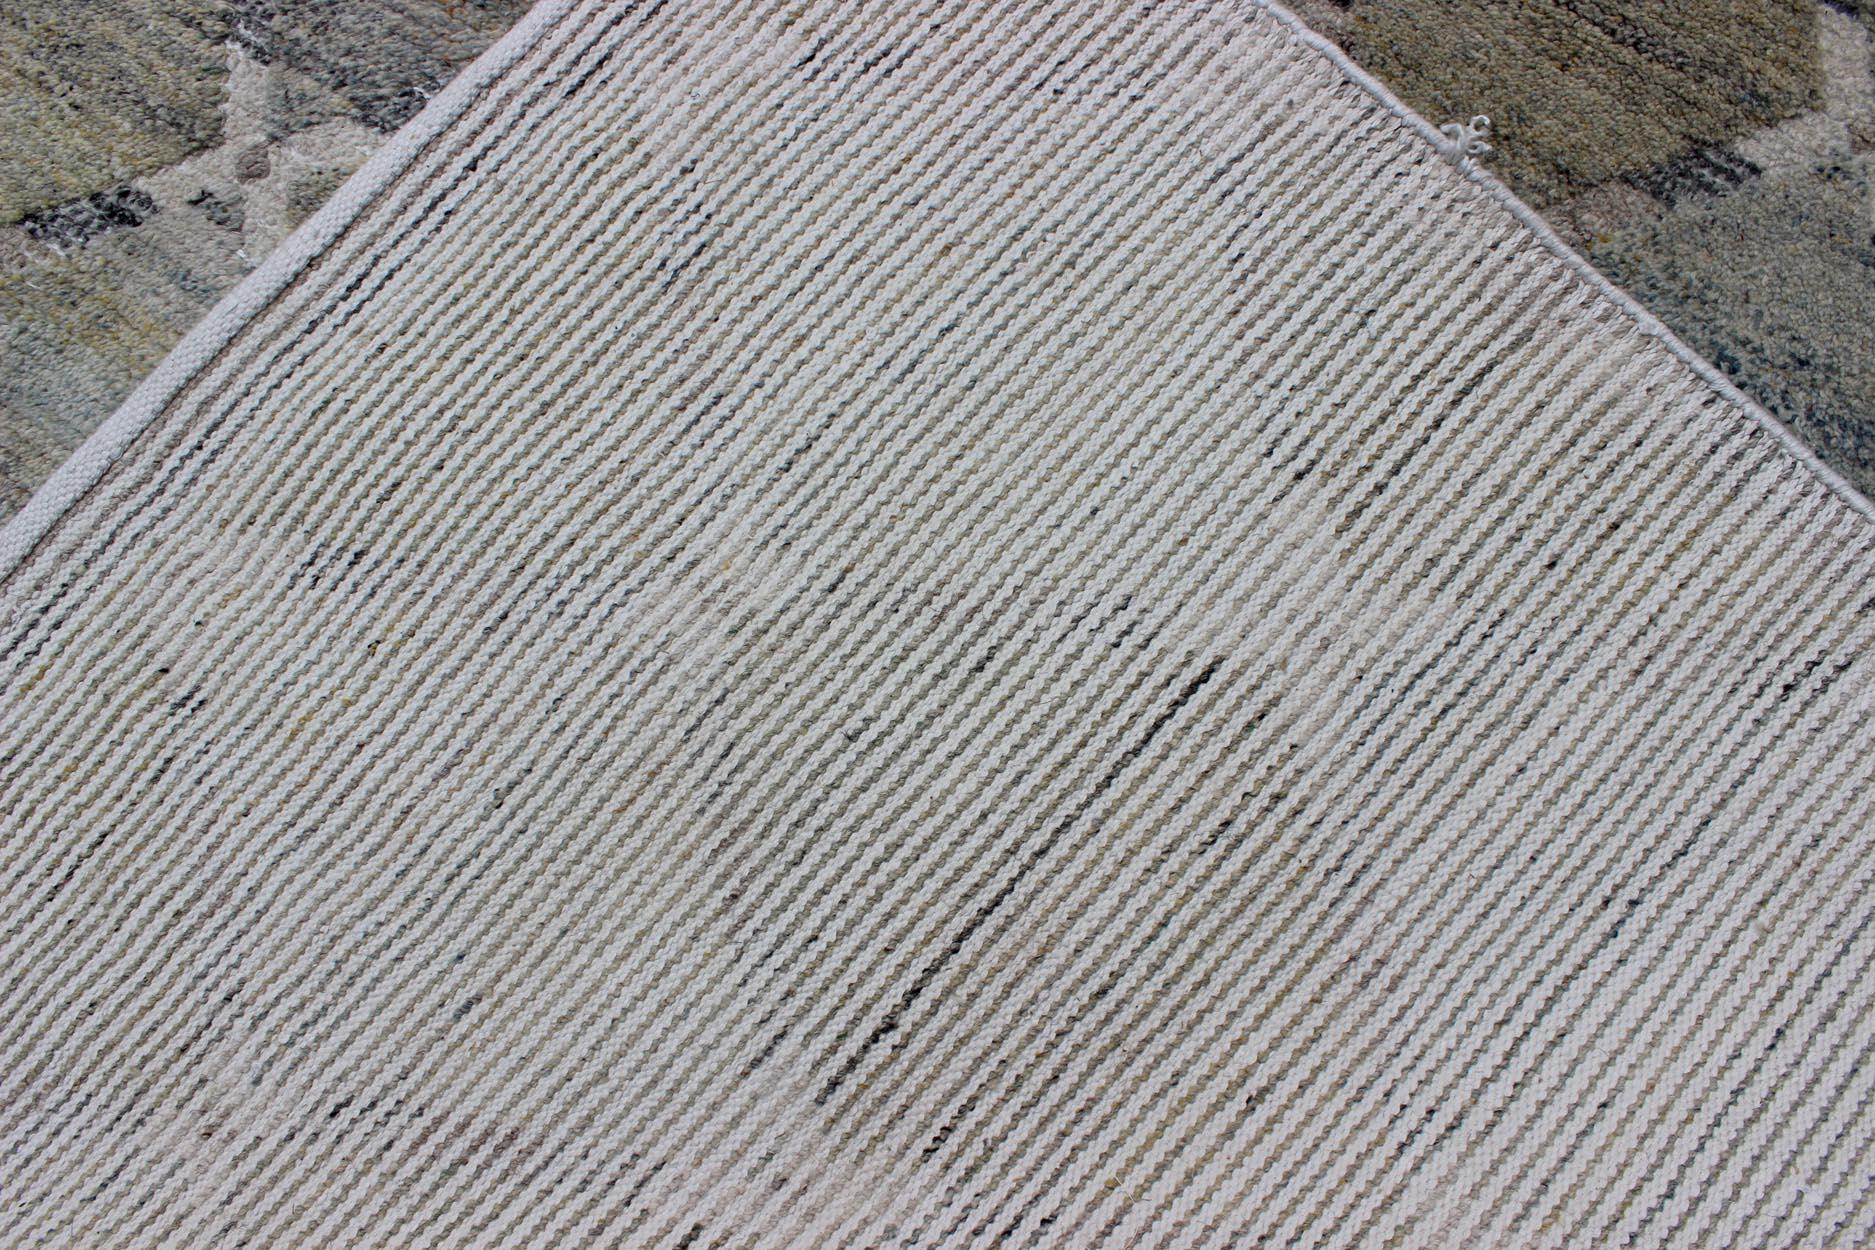 Geometric Latticework Pattern Modern Scandinavian Piled Rug in Shades of Gray For Sale 4